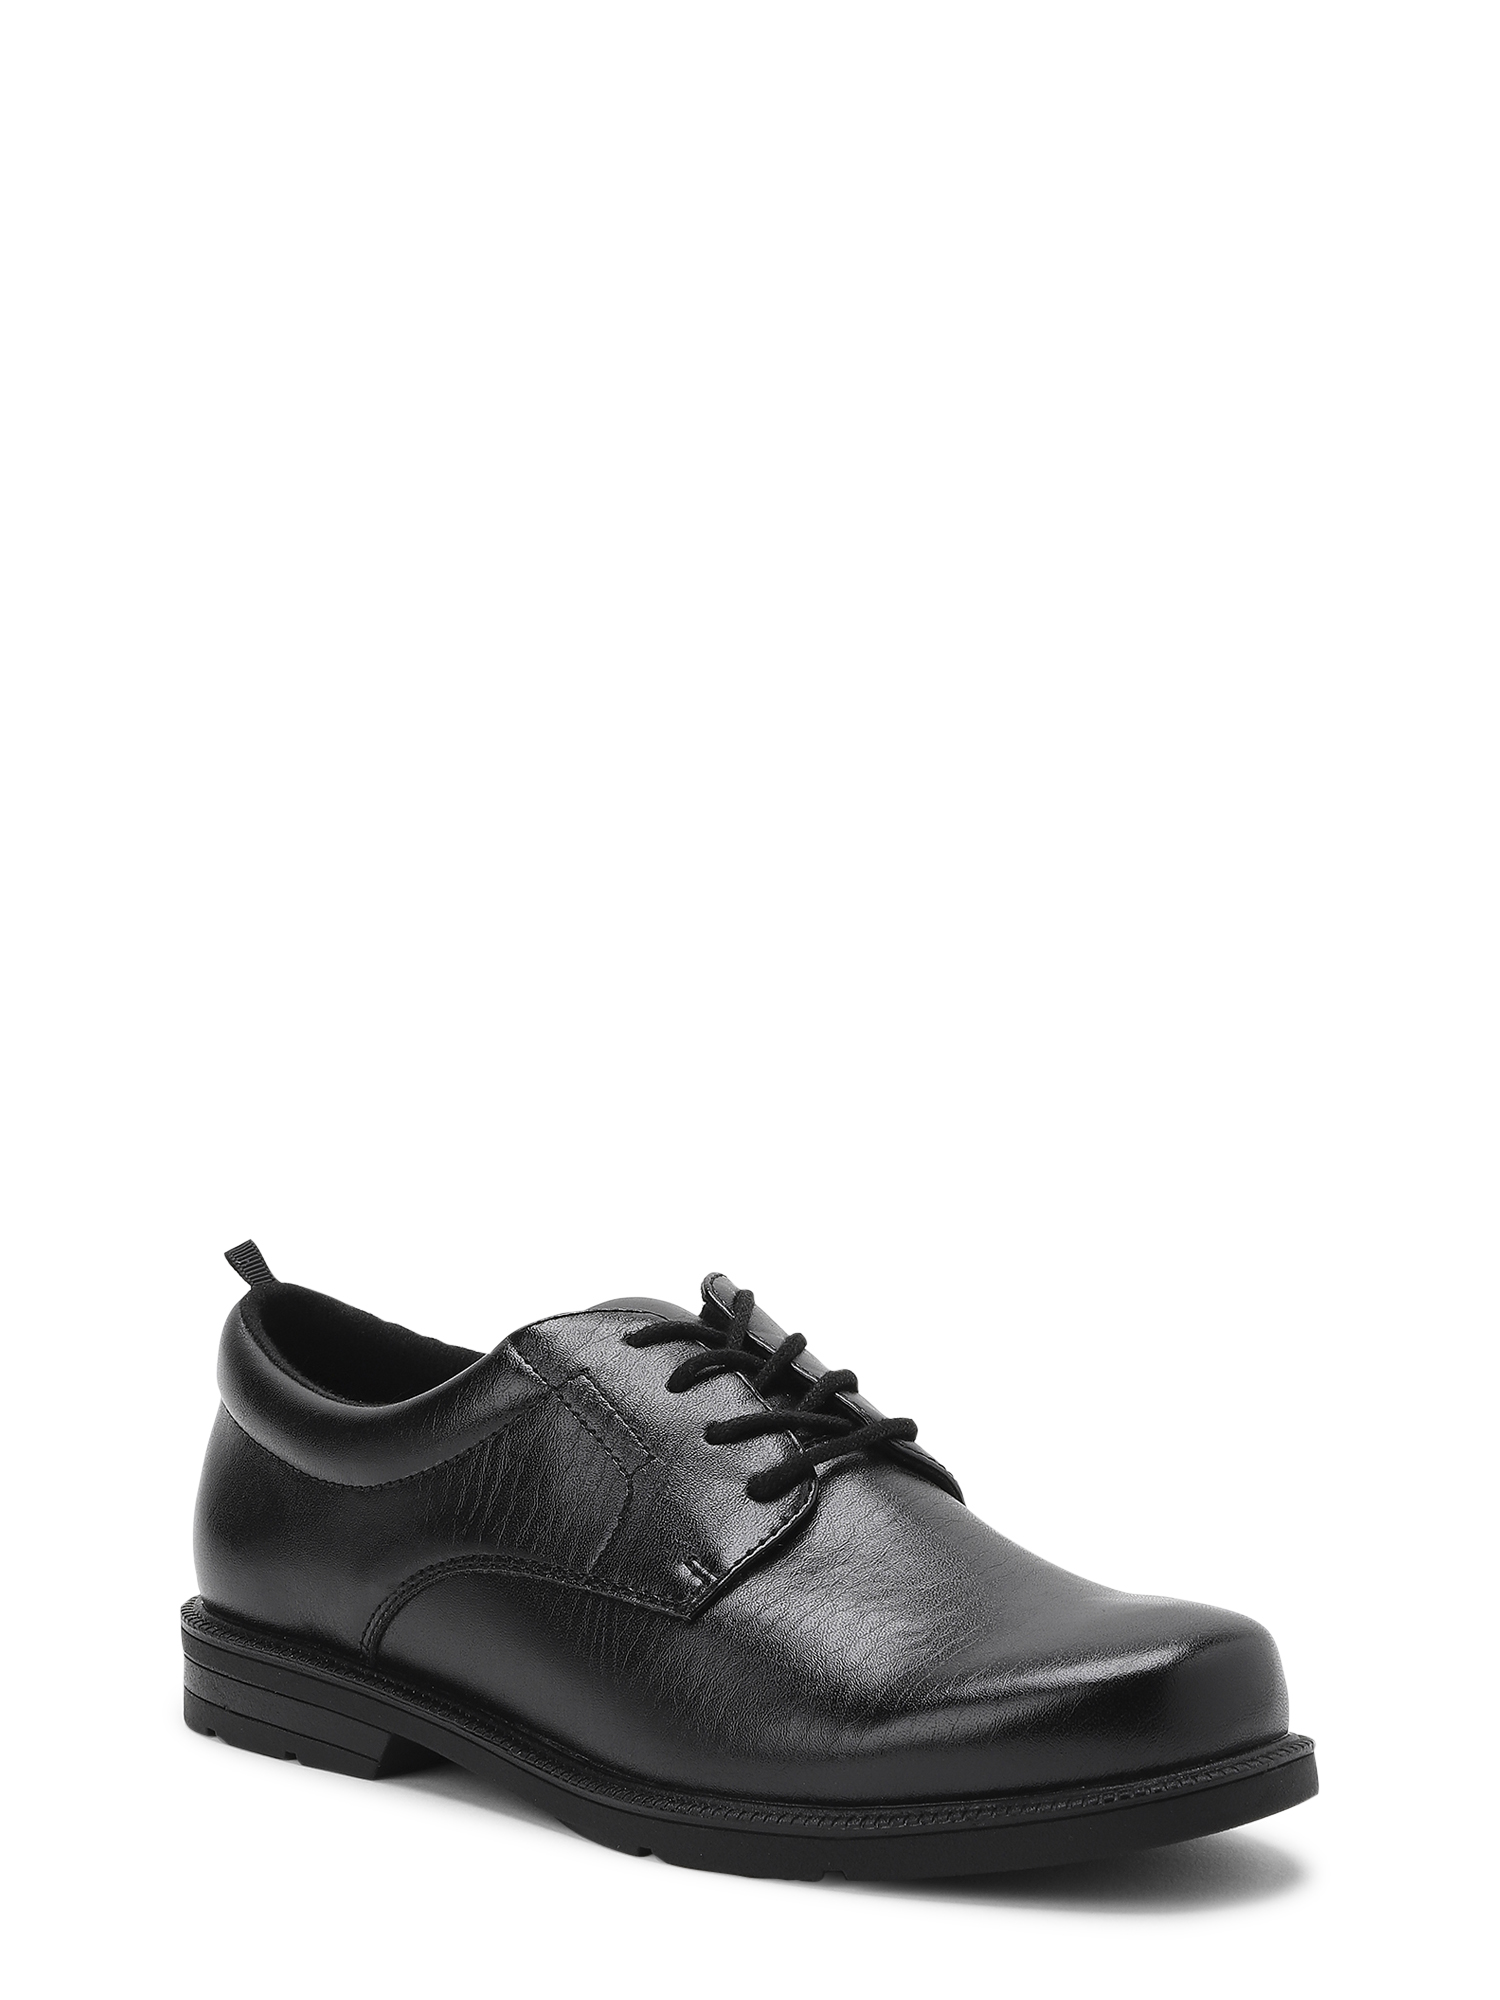 black dress shoes walmart